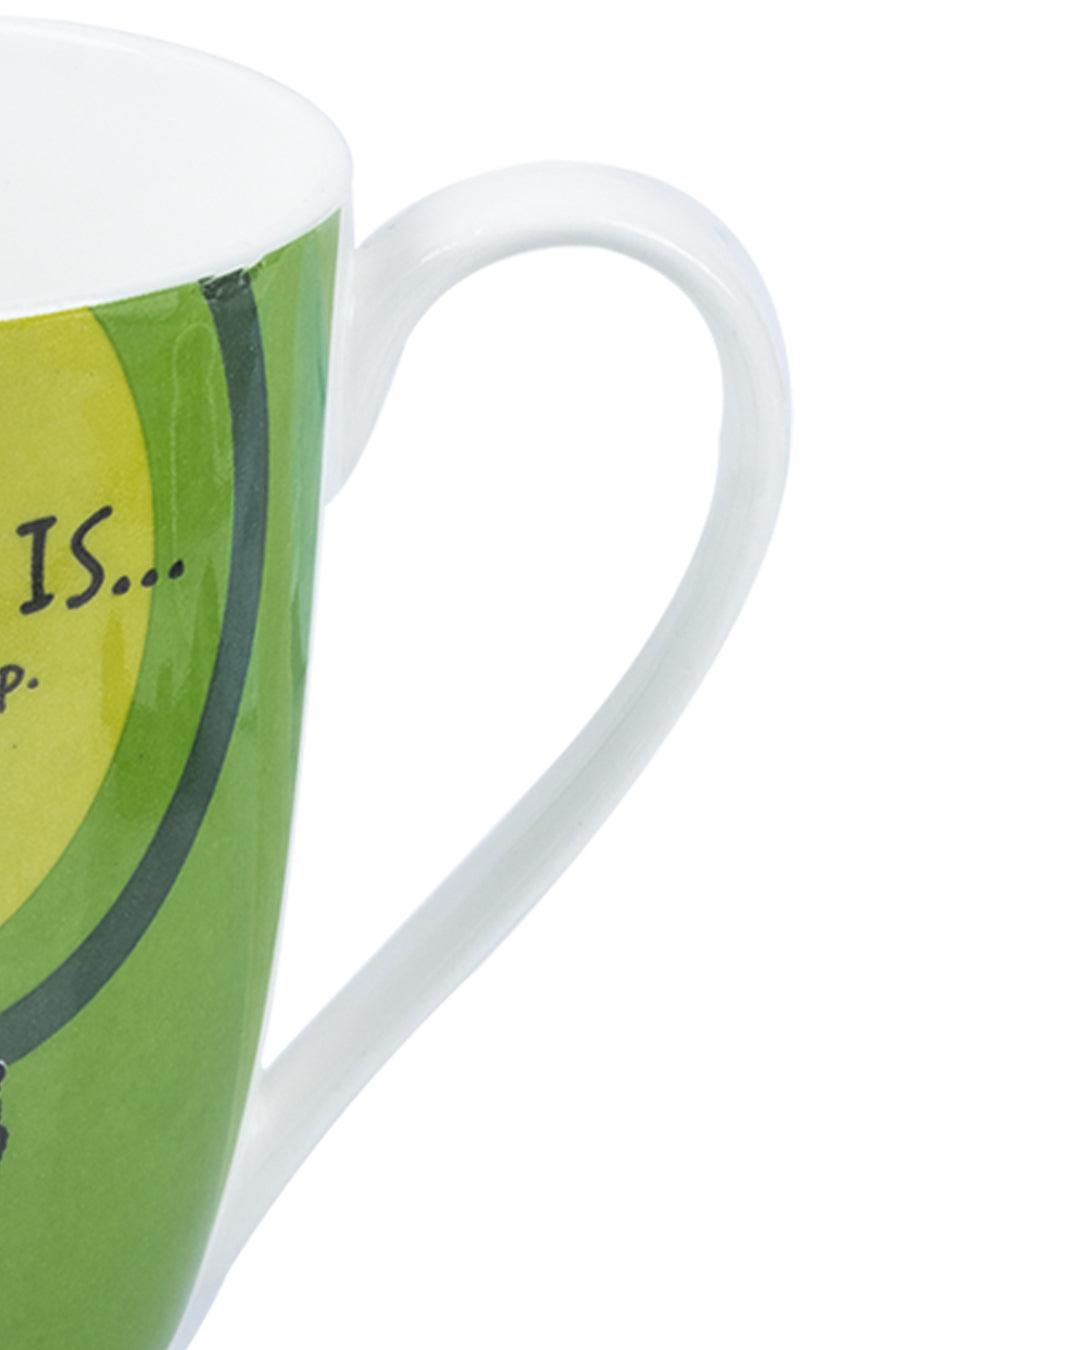 Market 99 - 'HAPPINESS IS … a soild friendship' Graphic Print Ceramic Tea, Milk & Coffee Mugs (Set of 2, 340 mL) - MARKET 99